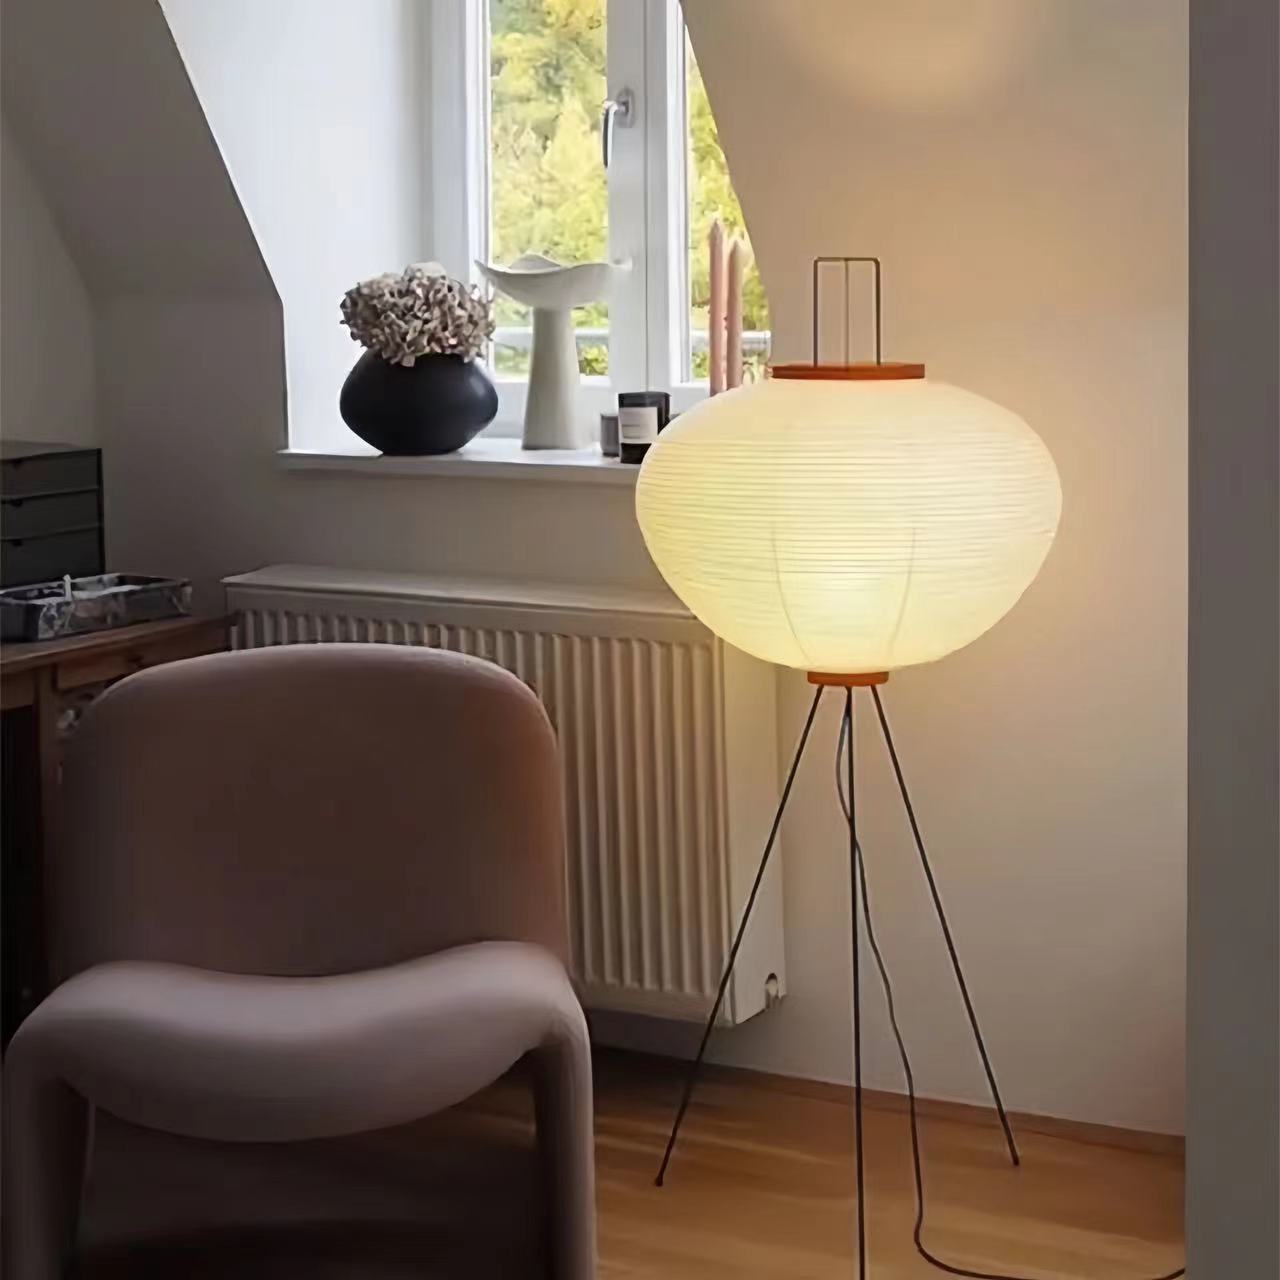 Japanese Noguchi Isamu Floor Lamp | Minimalistic Design